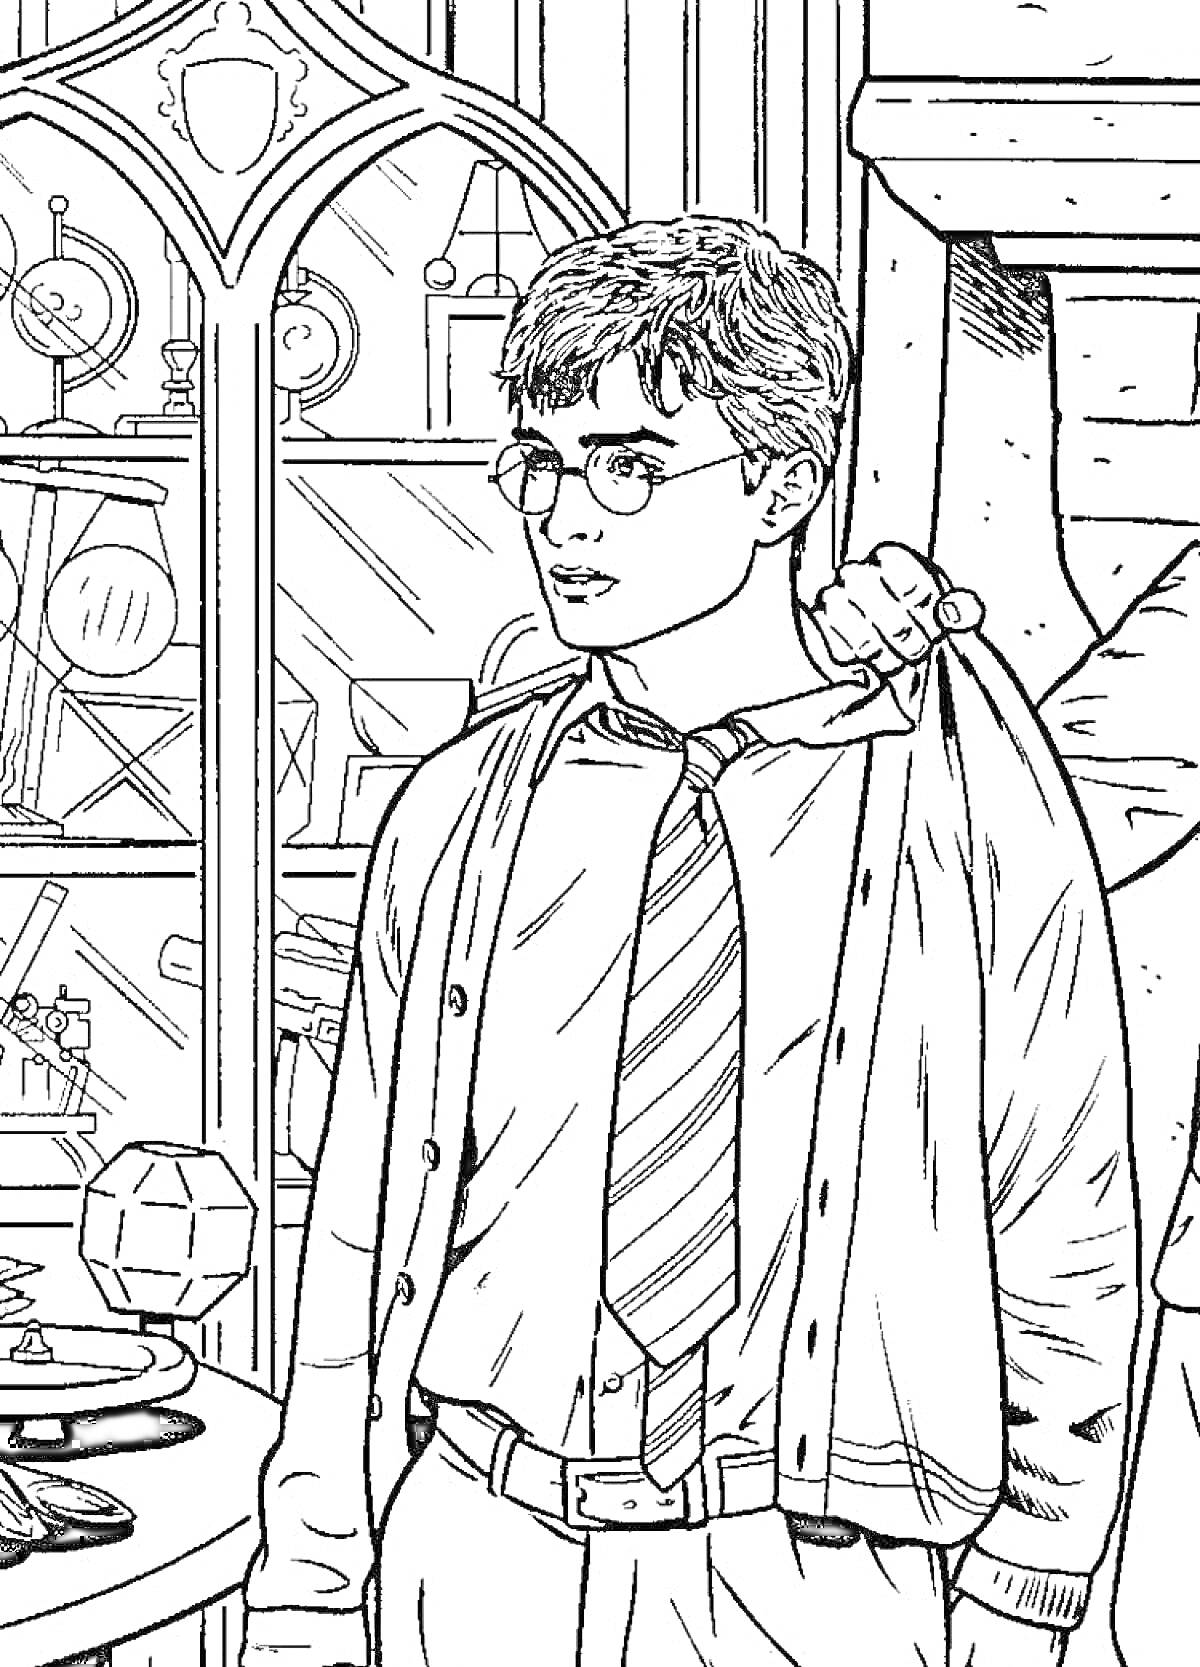 Гарри Поттер в кабинете, полка с магическими артефактами, мужчина в мантии